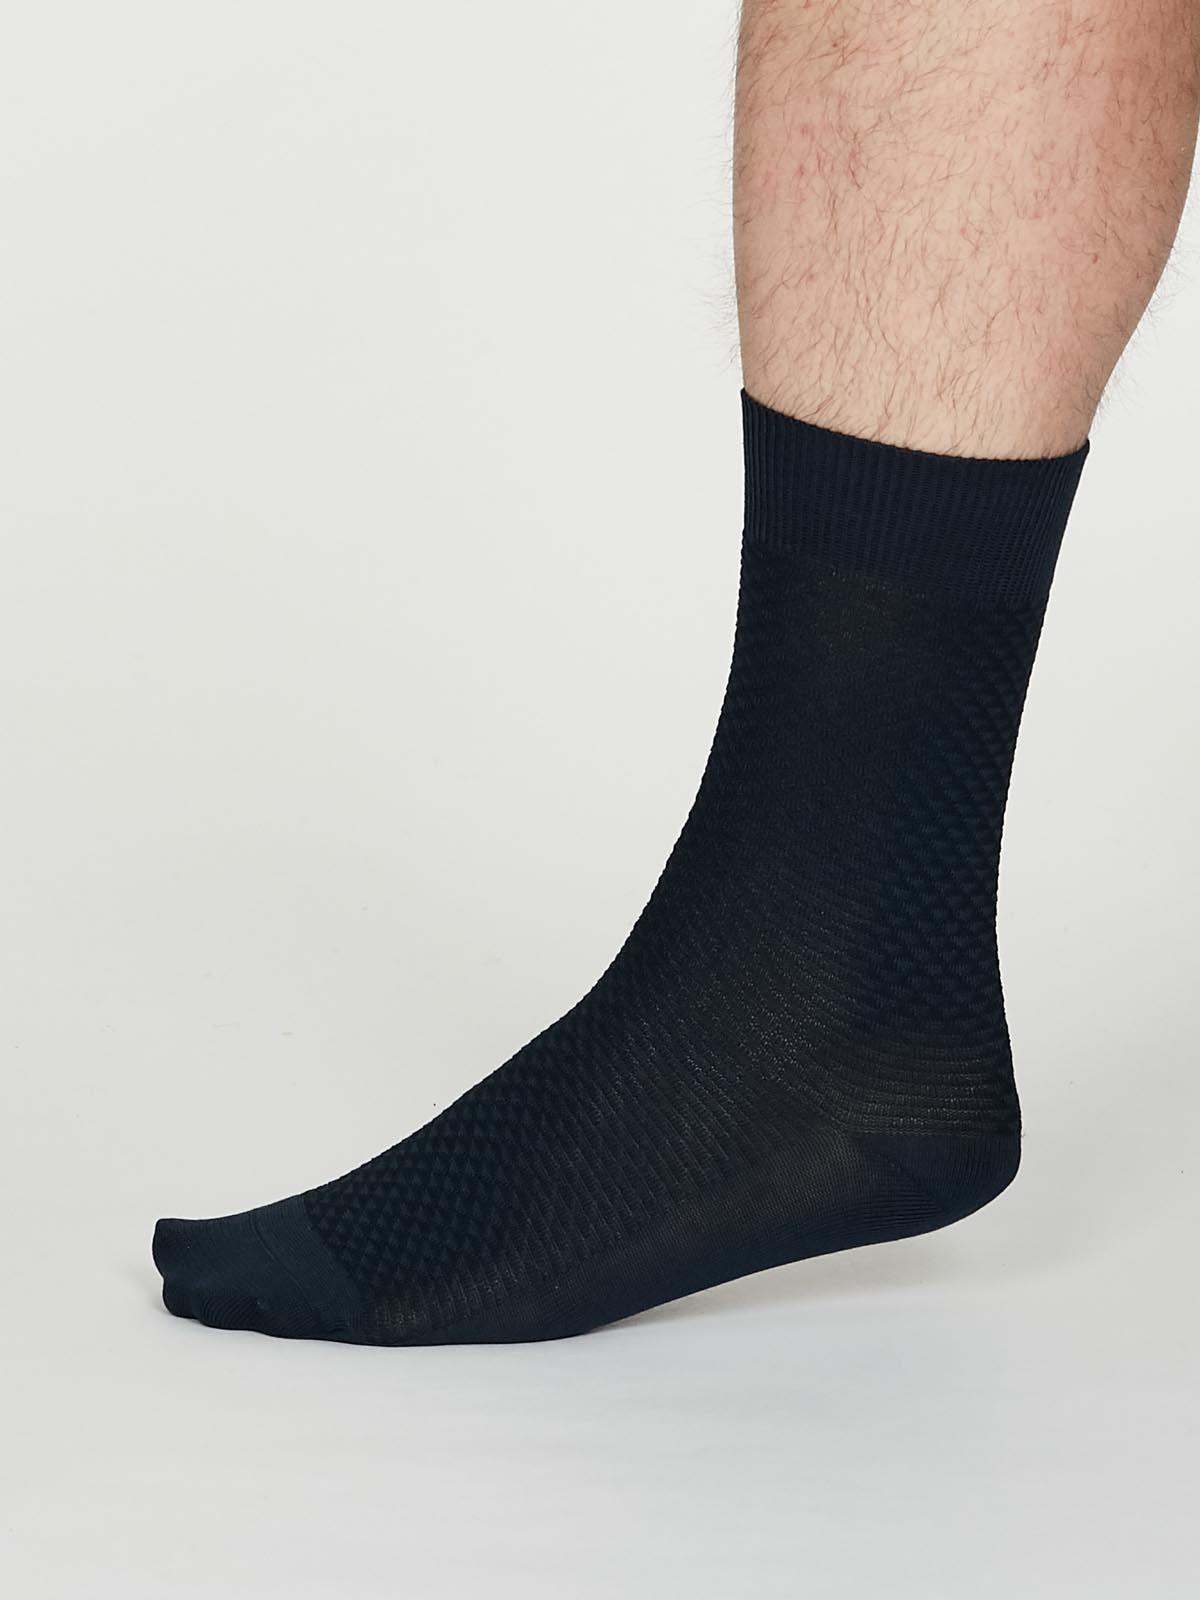 Geoffrey Organic Cotton Suit Socks - Navy Blue - Thought Clothing UK